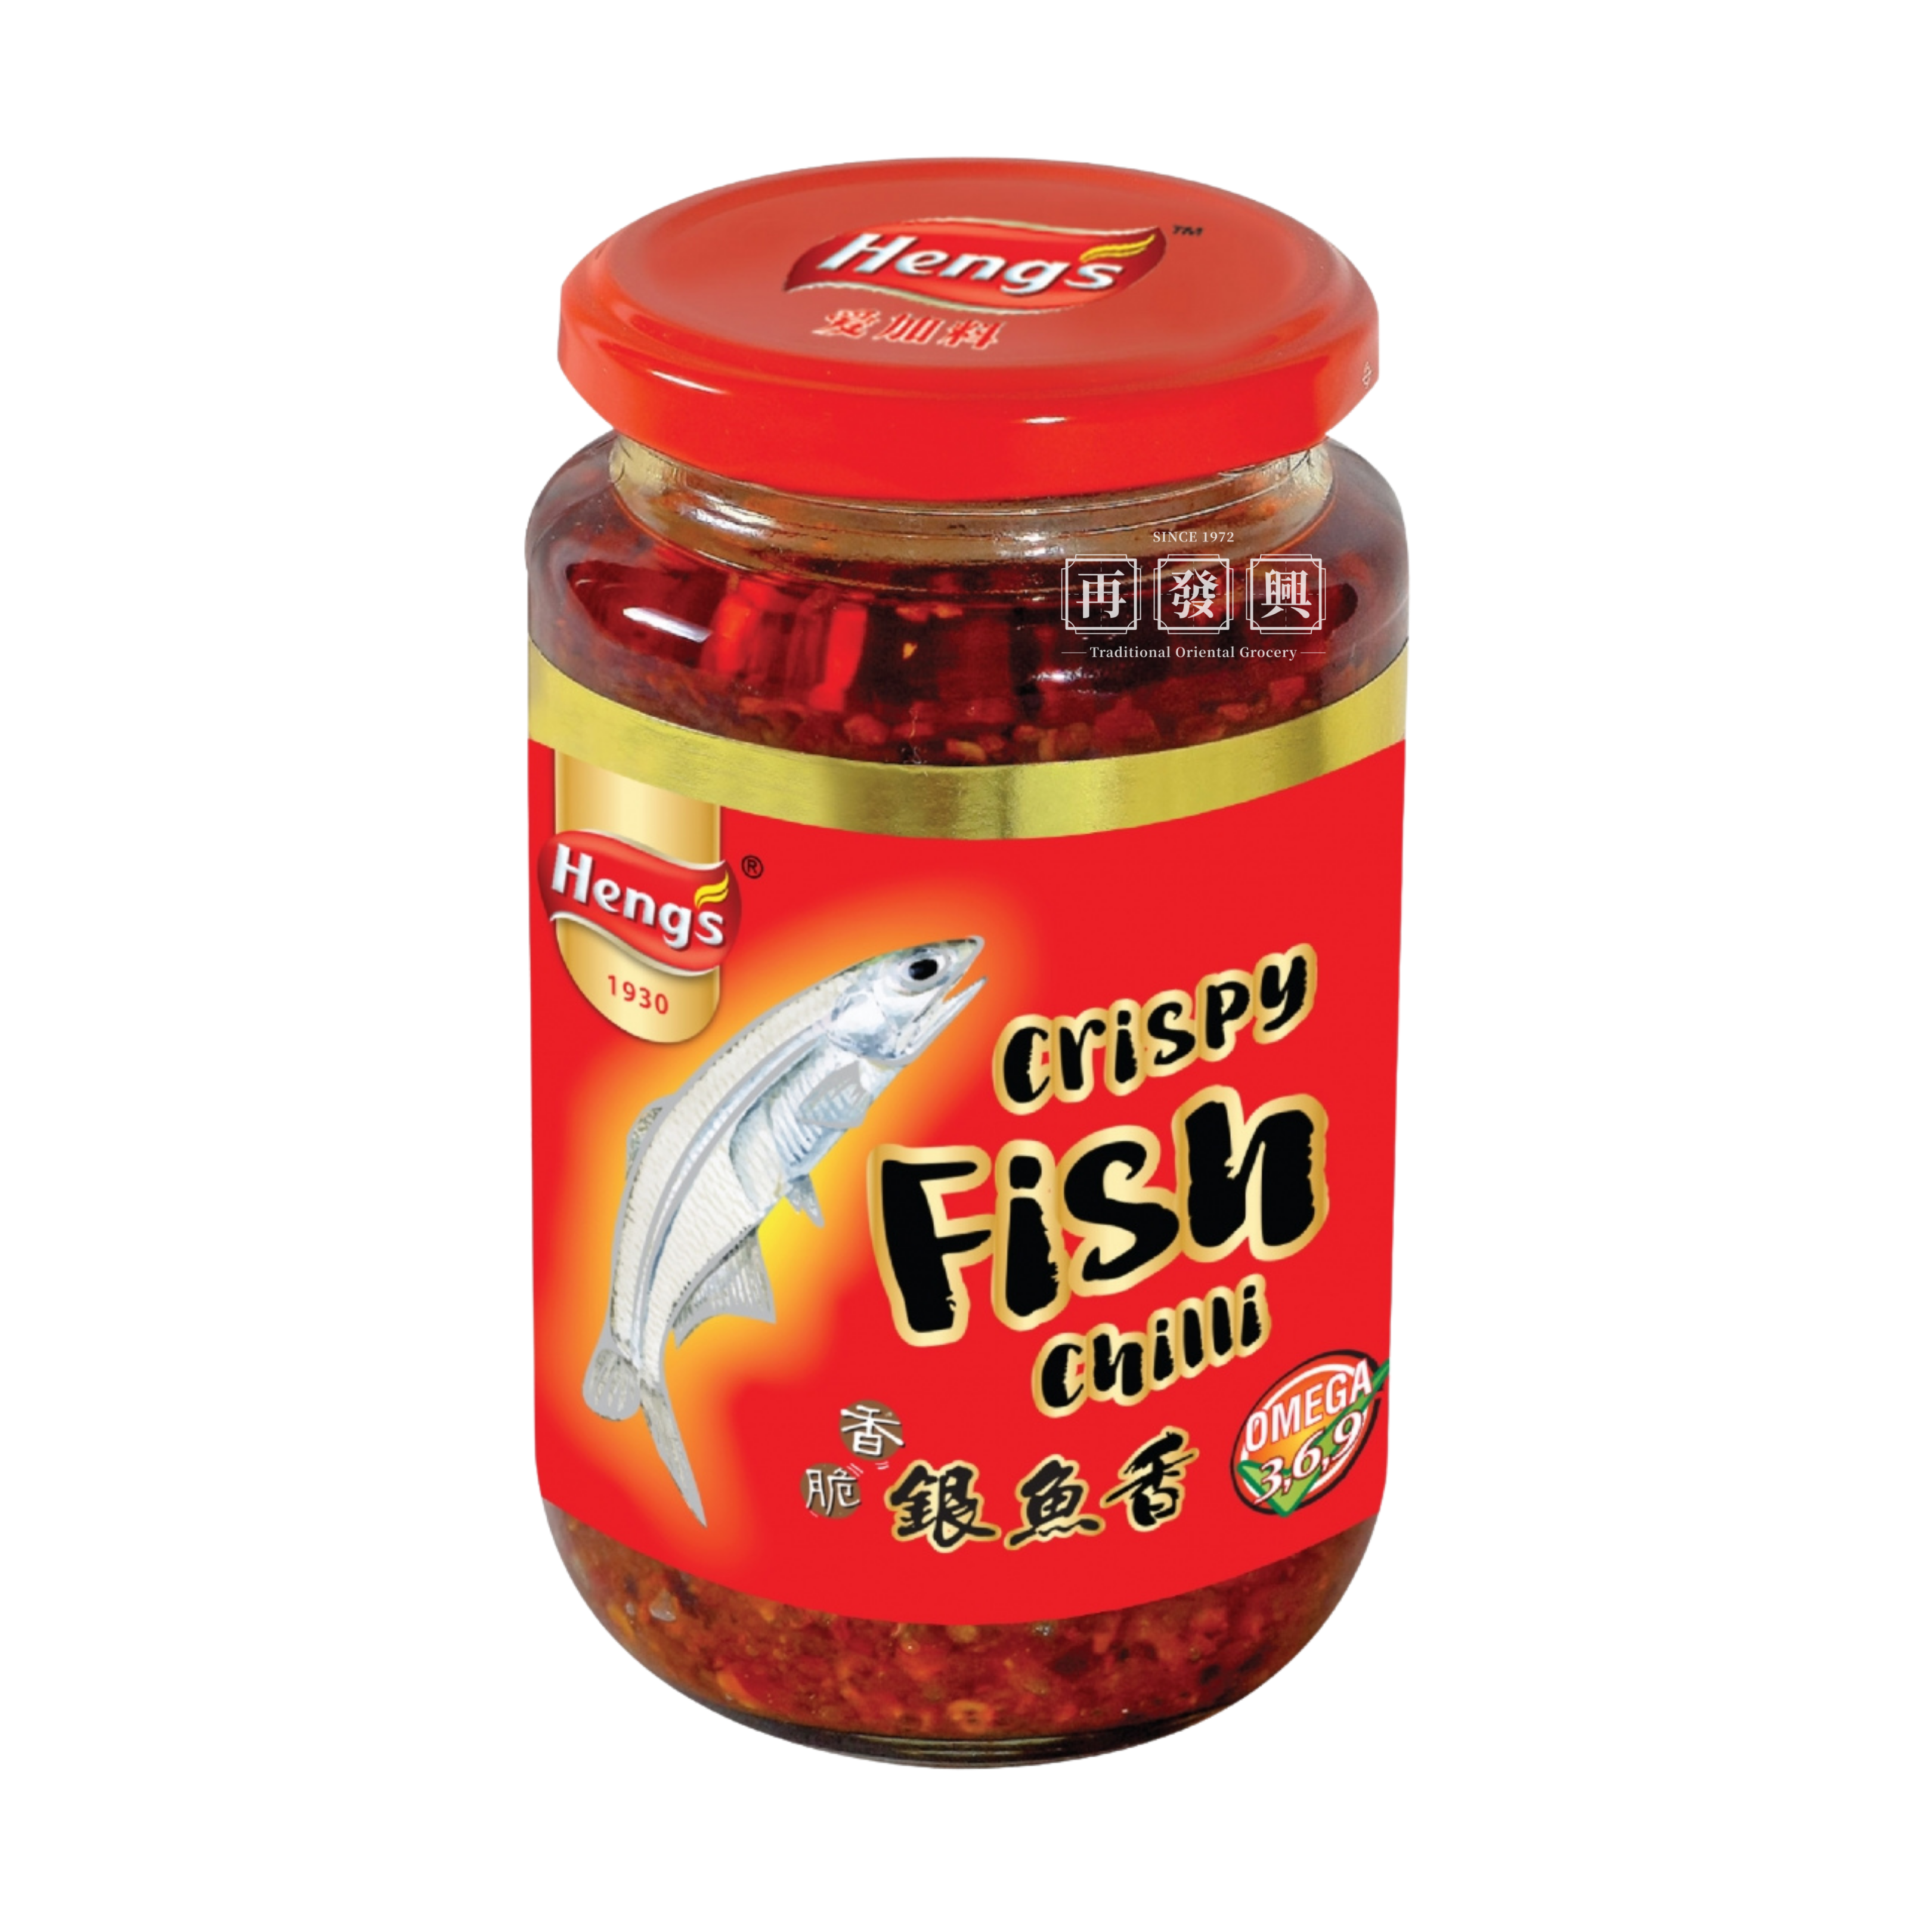 Hengs Crispy Fish Chilli 爱加料香脆银鱼香 340g